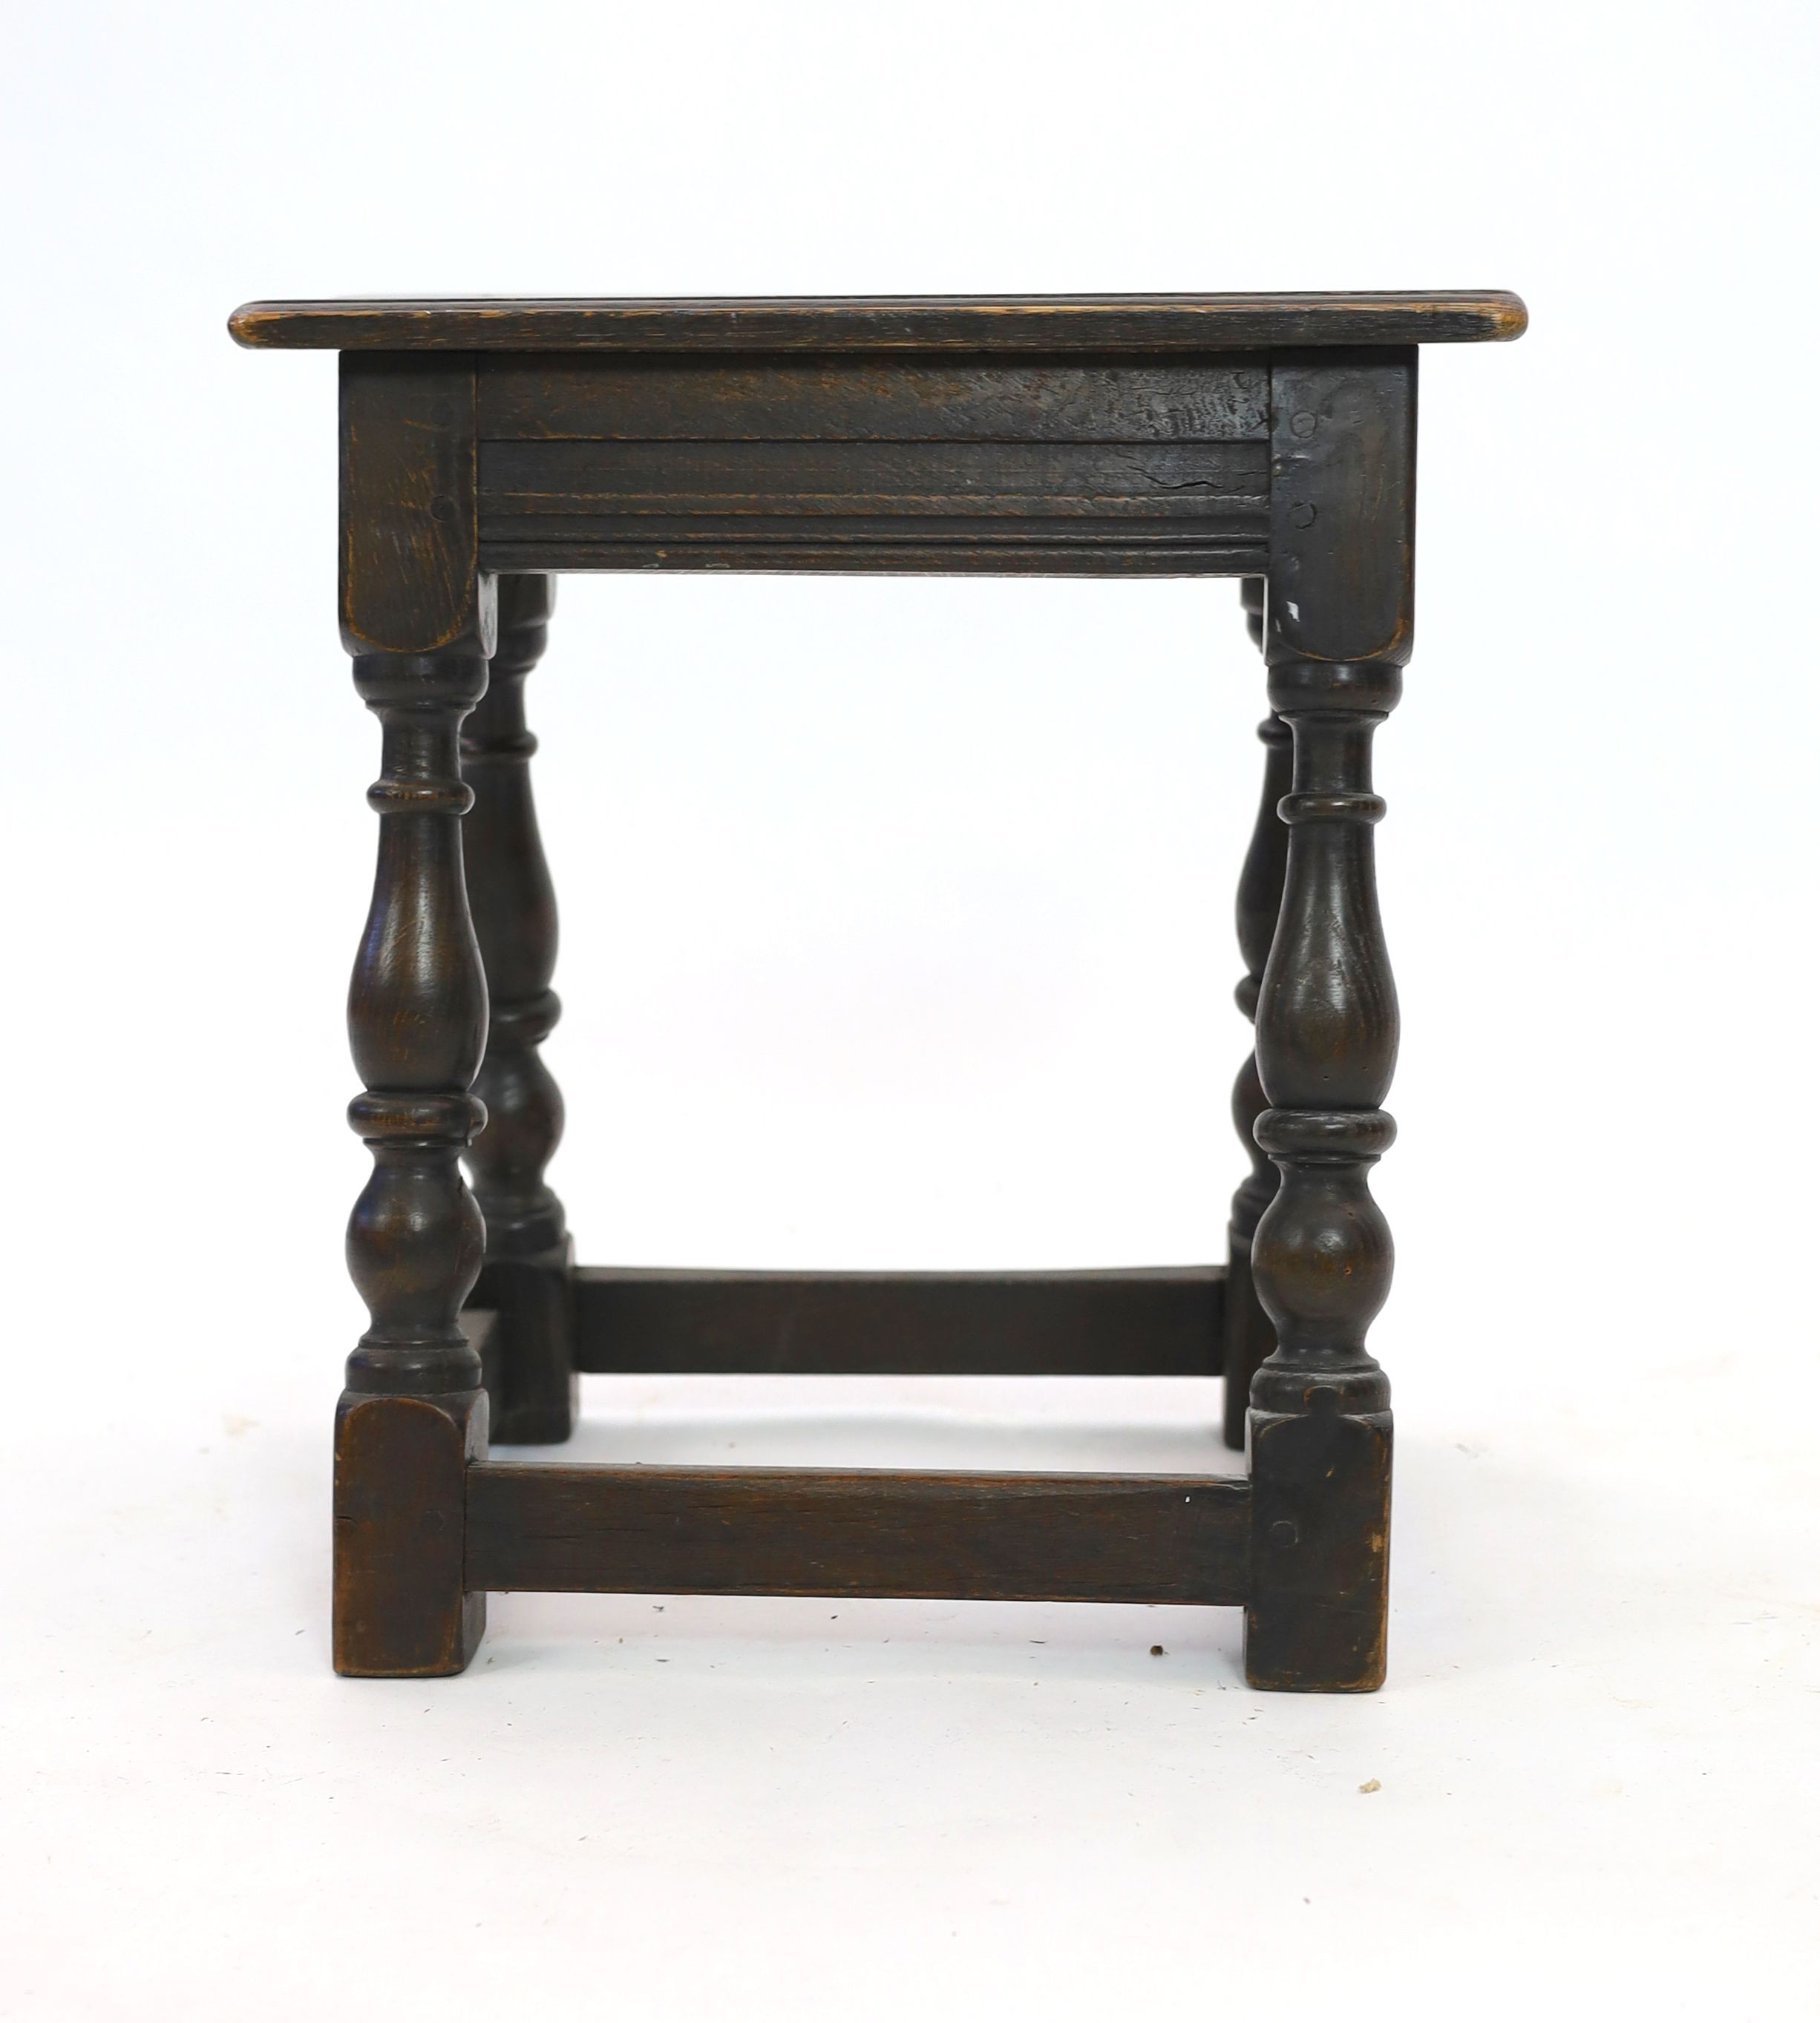 An 18th century style rectangular oak joint stool, width 42cm depth 25cm height 44cm